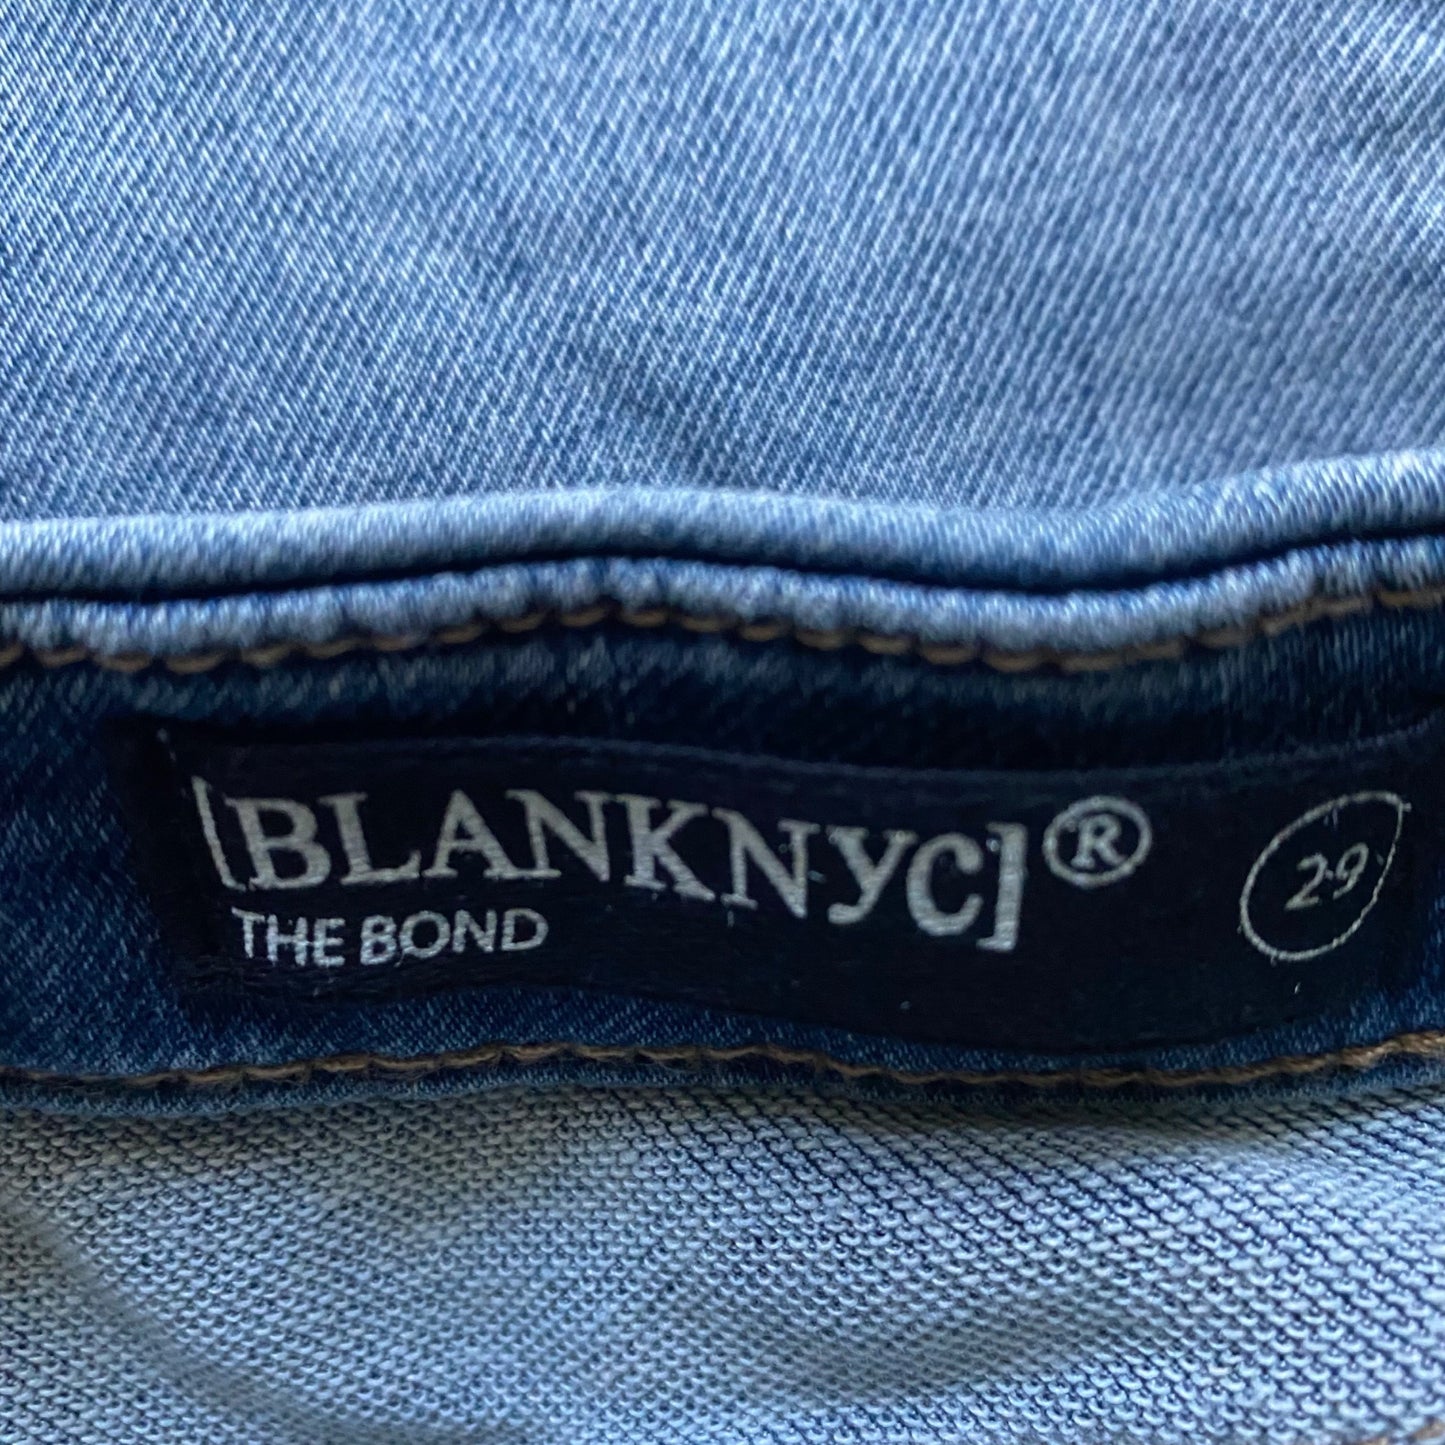 Blank NYC sz 29 the bond mid rise skinny gloria jean in indigo NWT